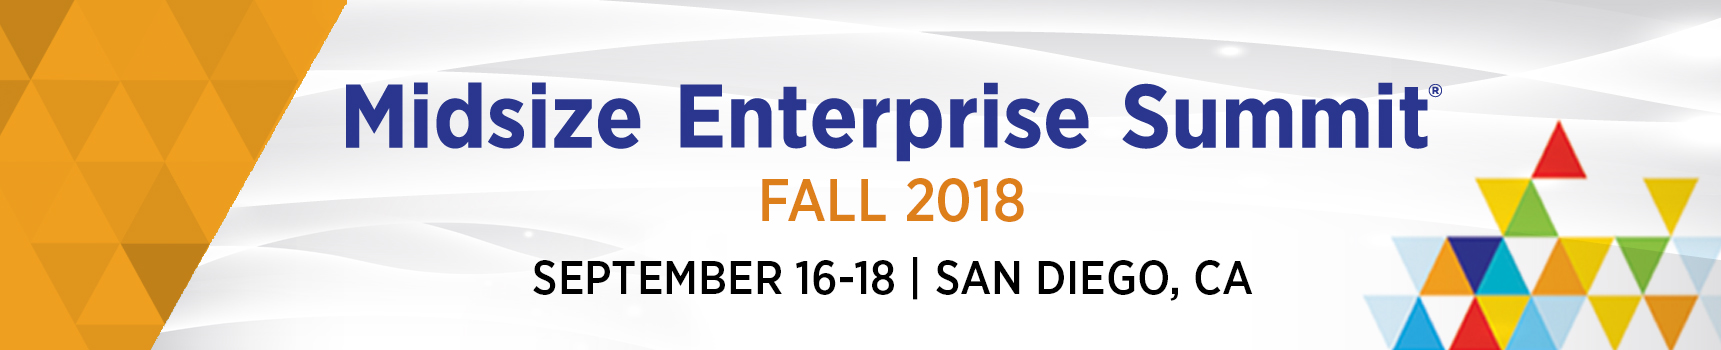 Midsize Enterprise Summit Fall 2018